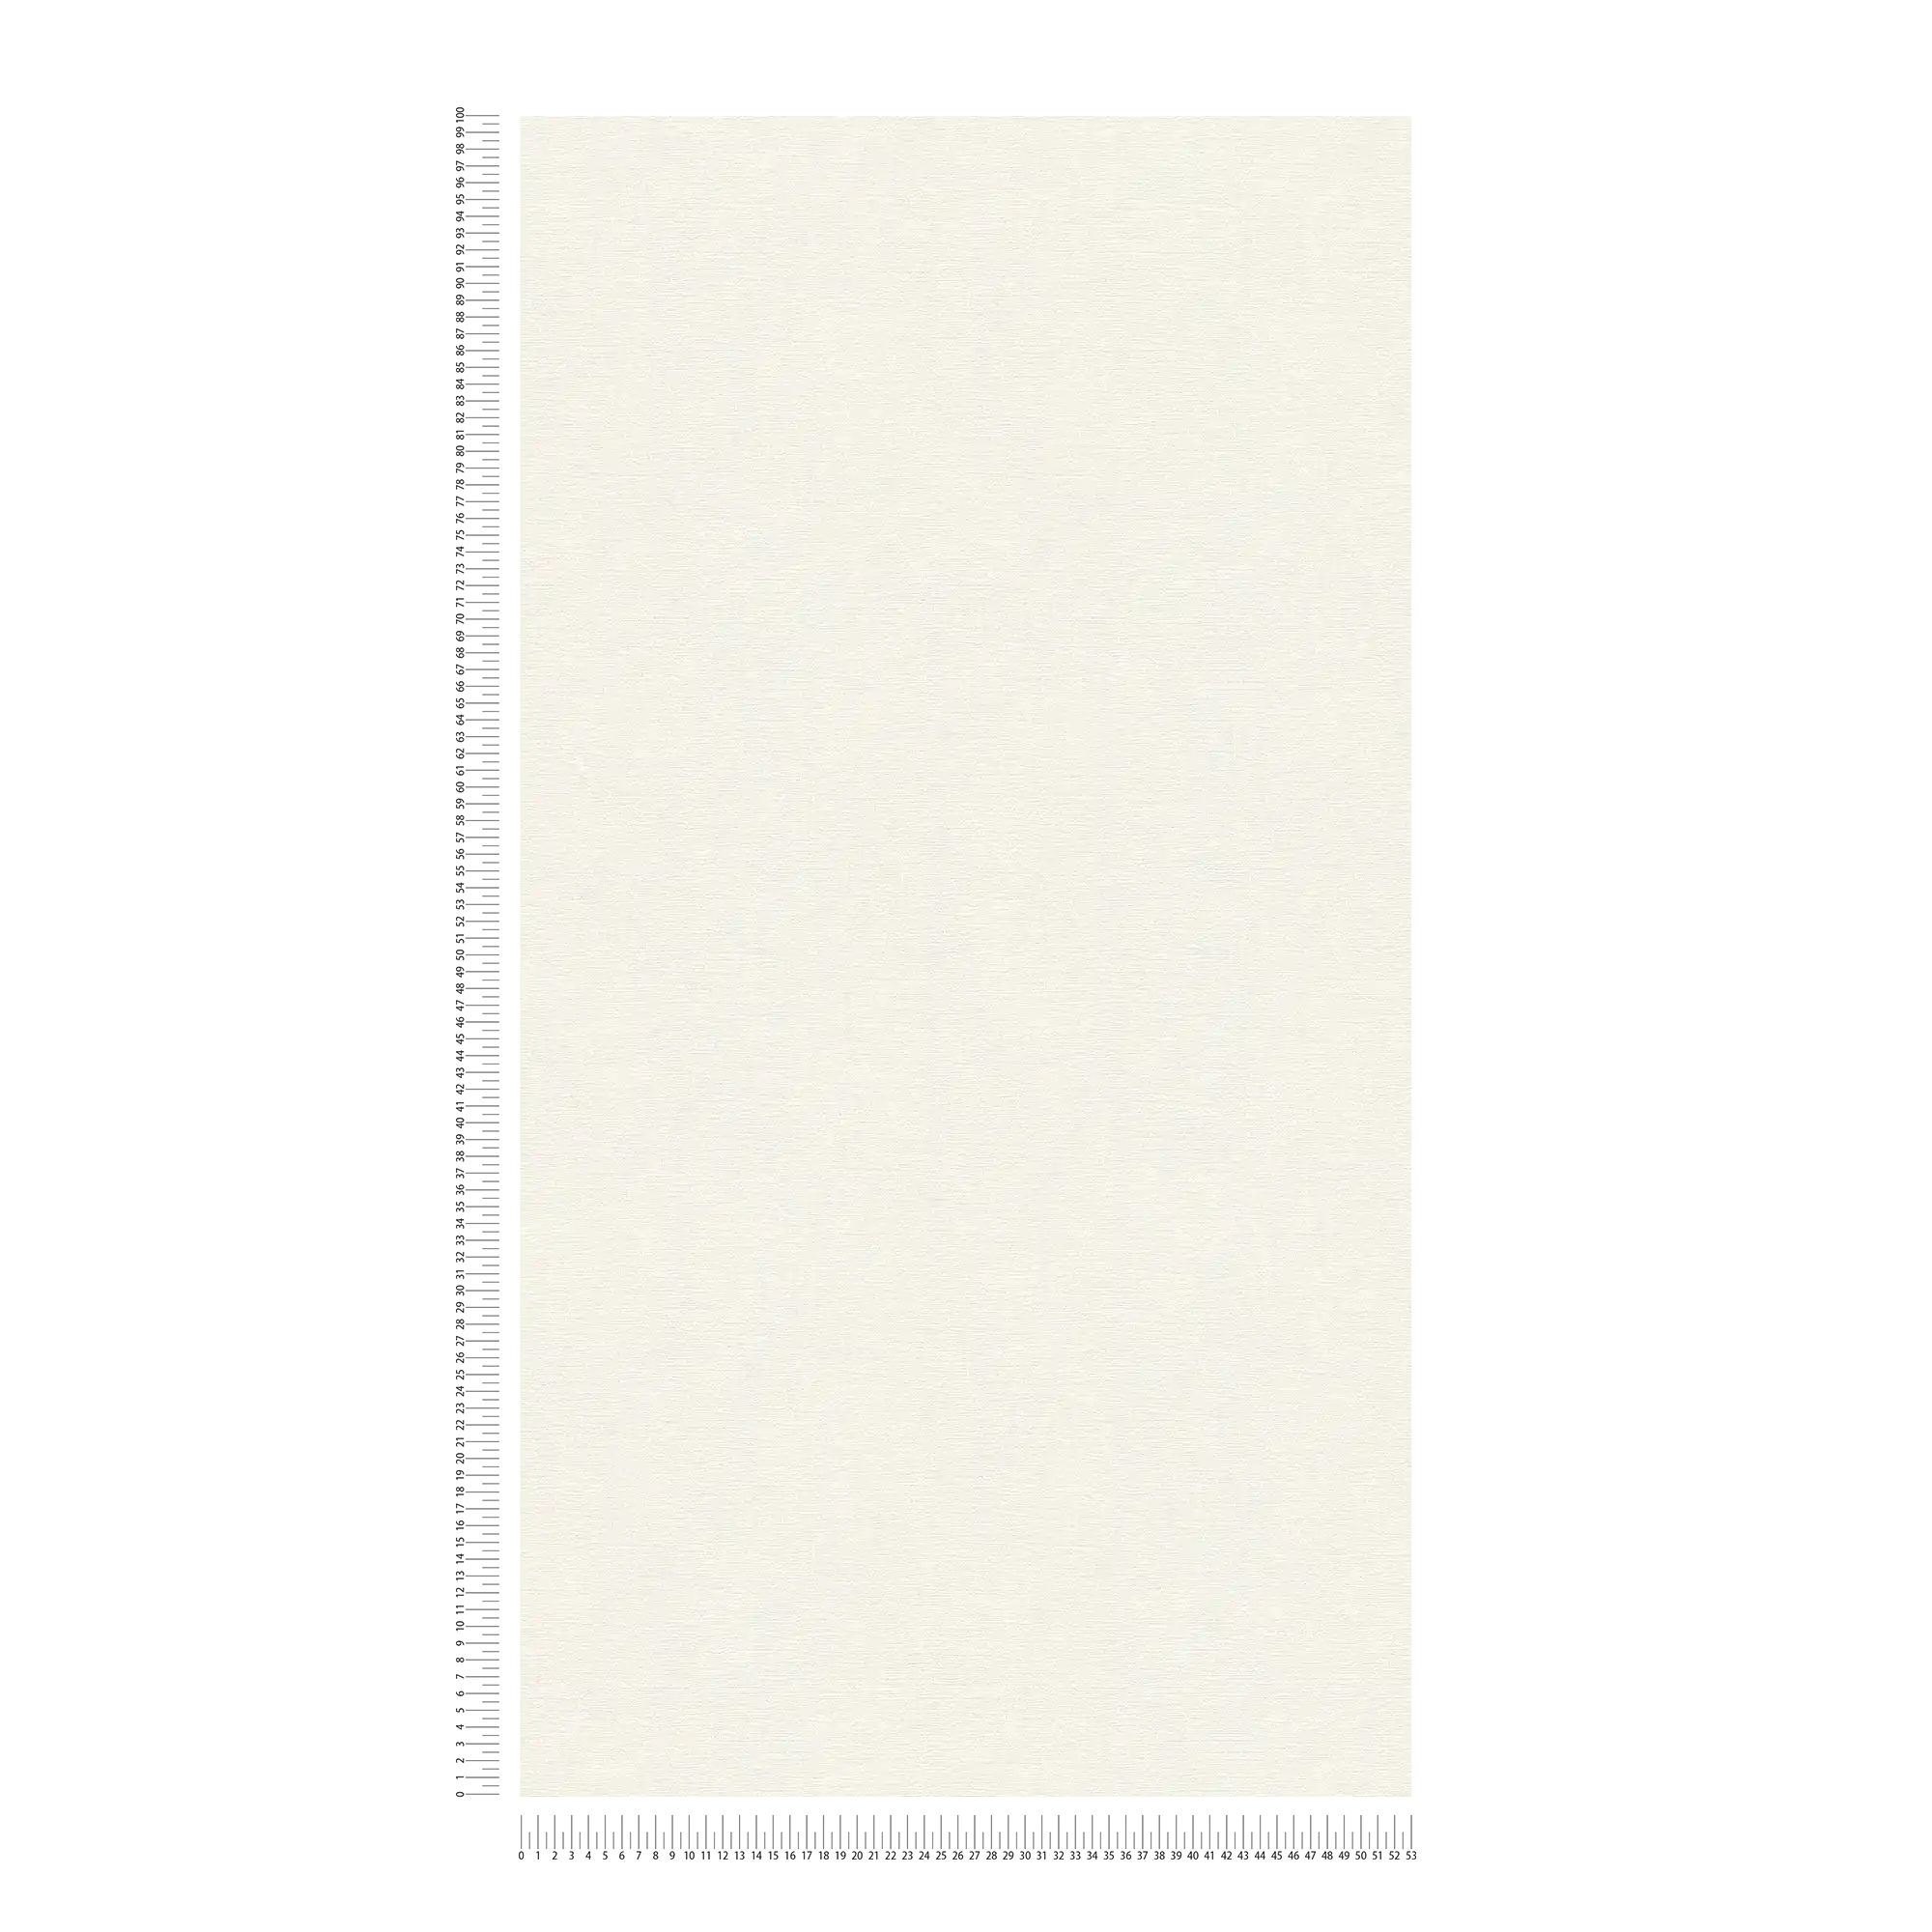             Non-woven wallpaper plain with linen look - white
        